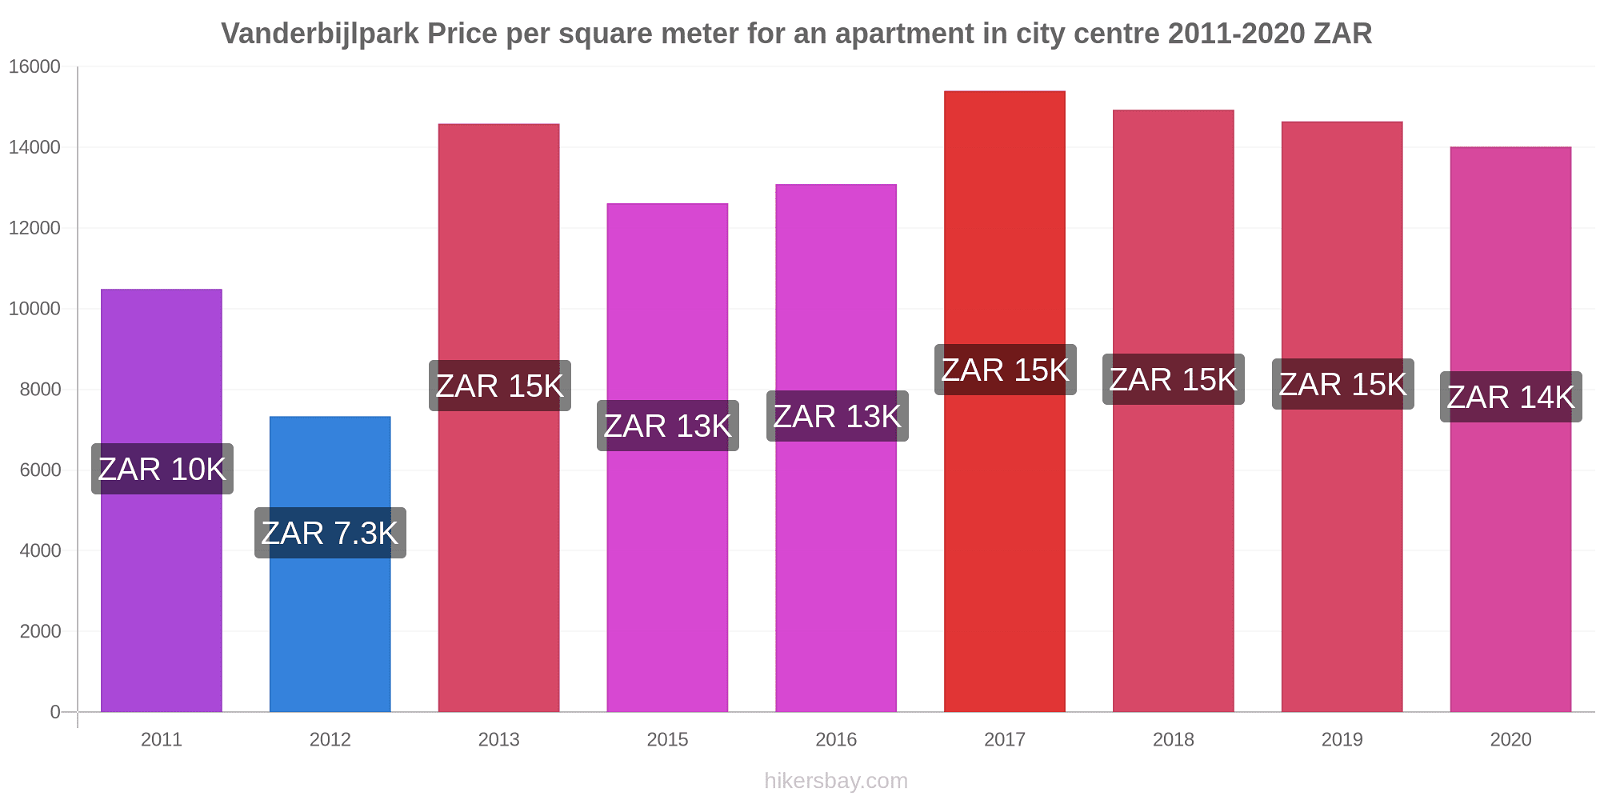 Vanderbijlpark price changes Price per square meter for an apartment in city centre hikersbay.com